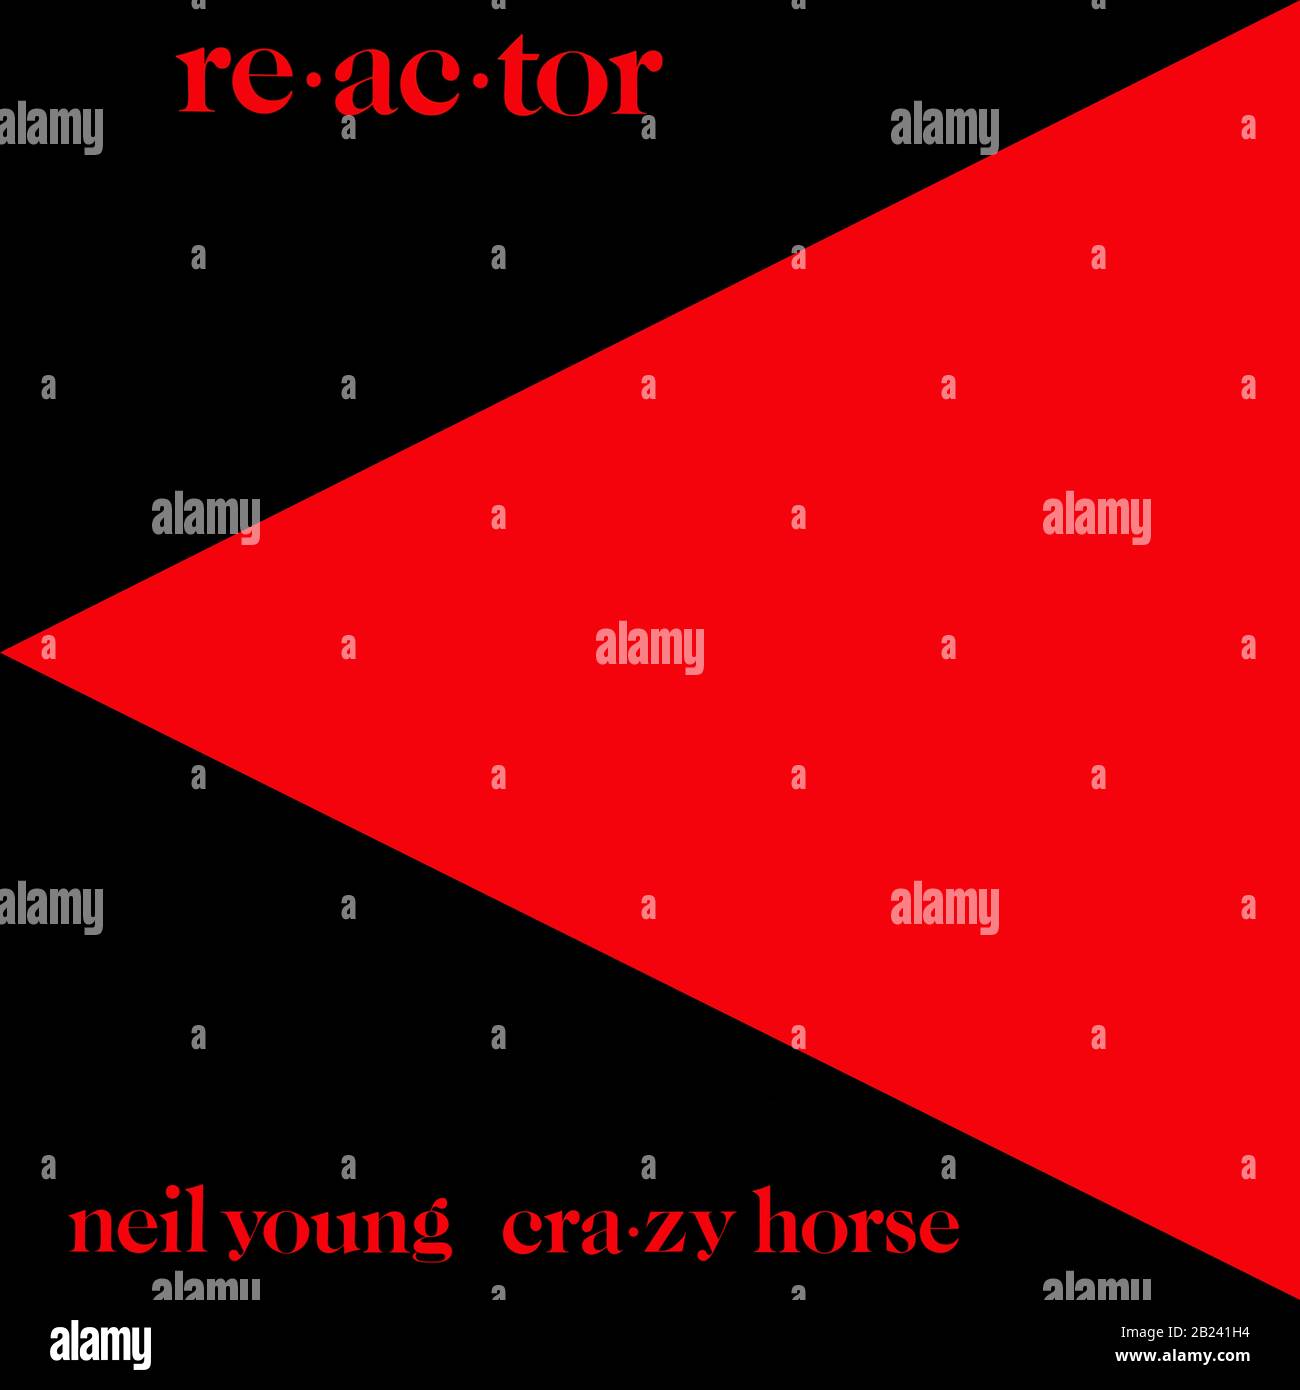 Neil Young & Crazy Horse - original vinyl album cover - Reactor - 1981 Stock Photo